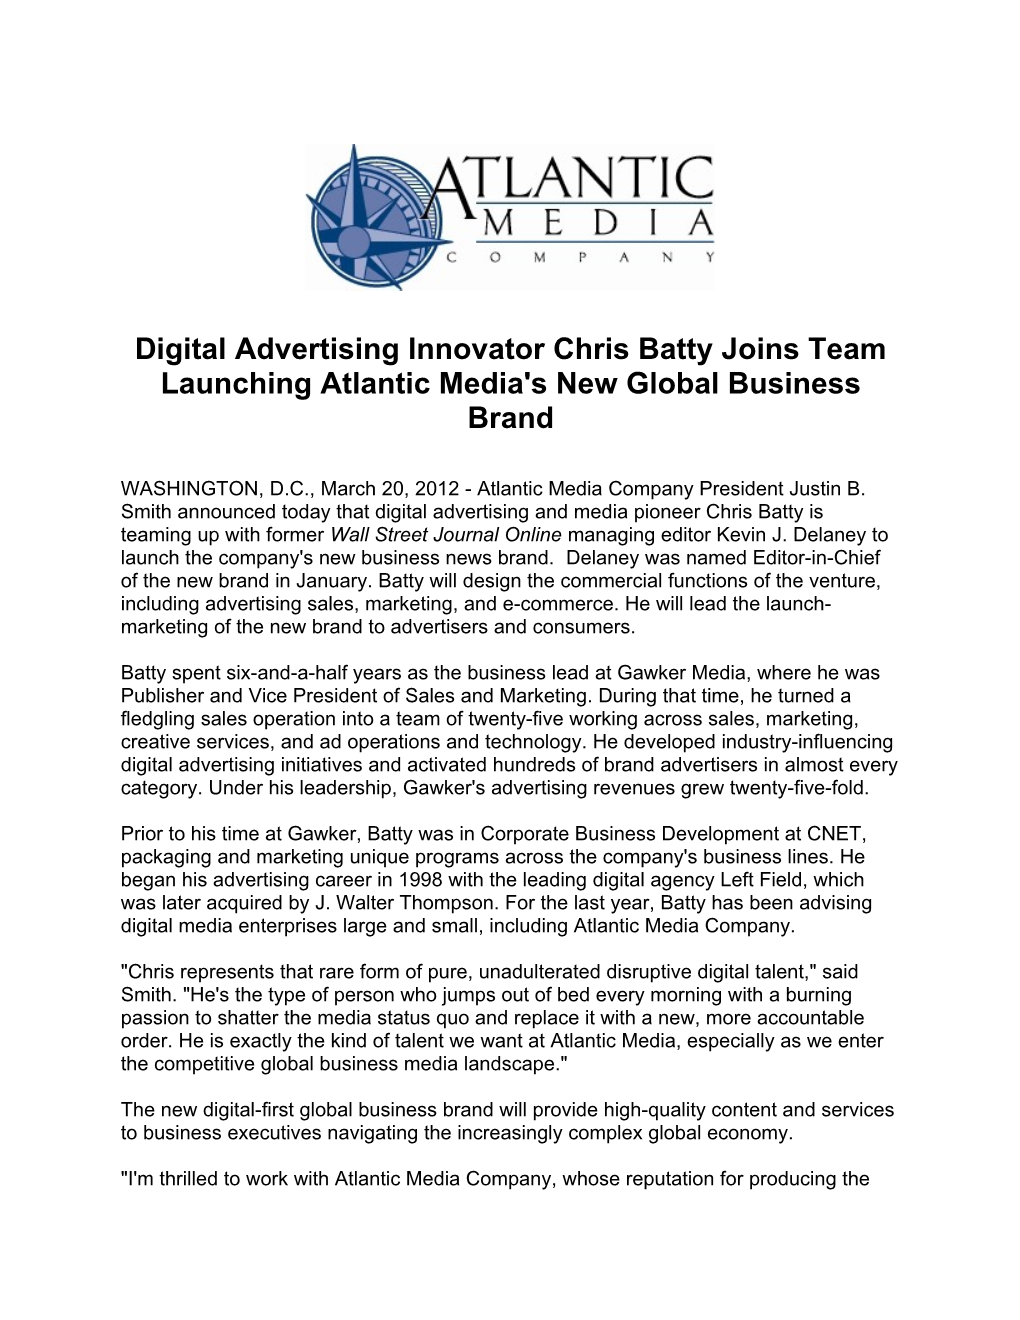 Digital Advertising Innovator Chris Batty Joins Team Launching Atlantic Media's New Global